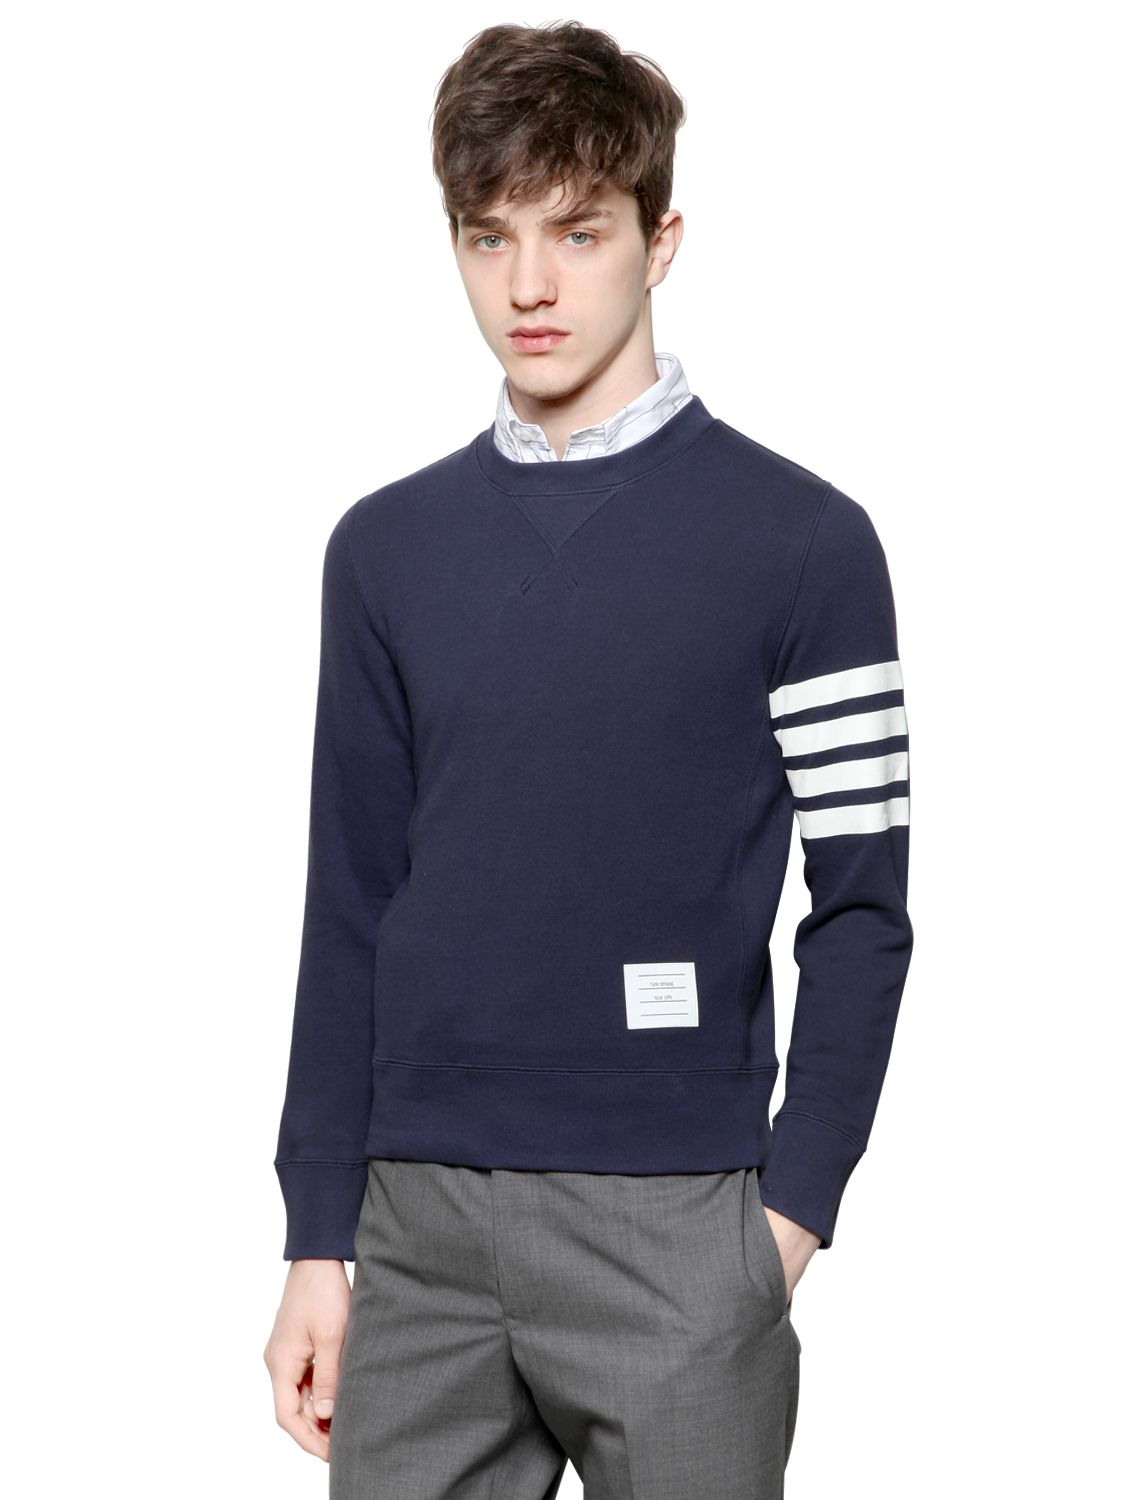 Lyst - Thom Browne Cotton Fleece Sweatshirt in Blue for Men